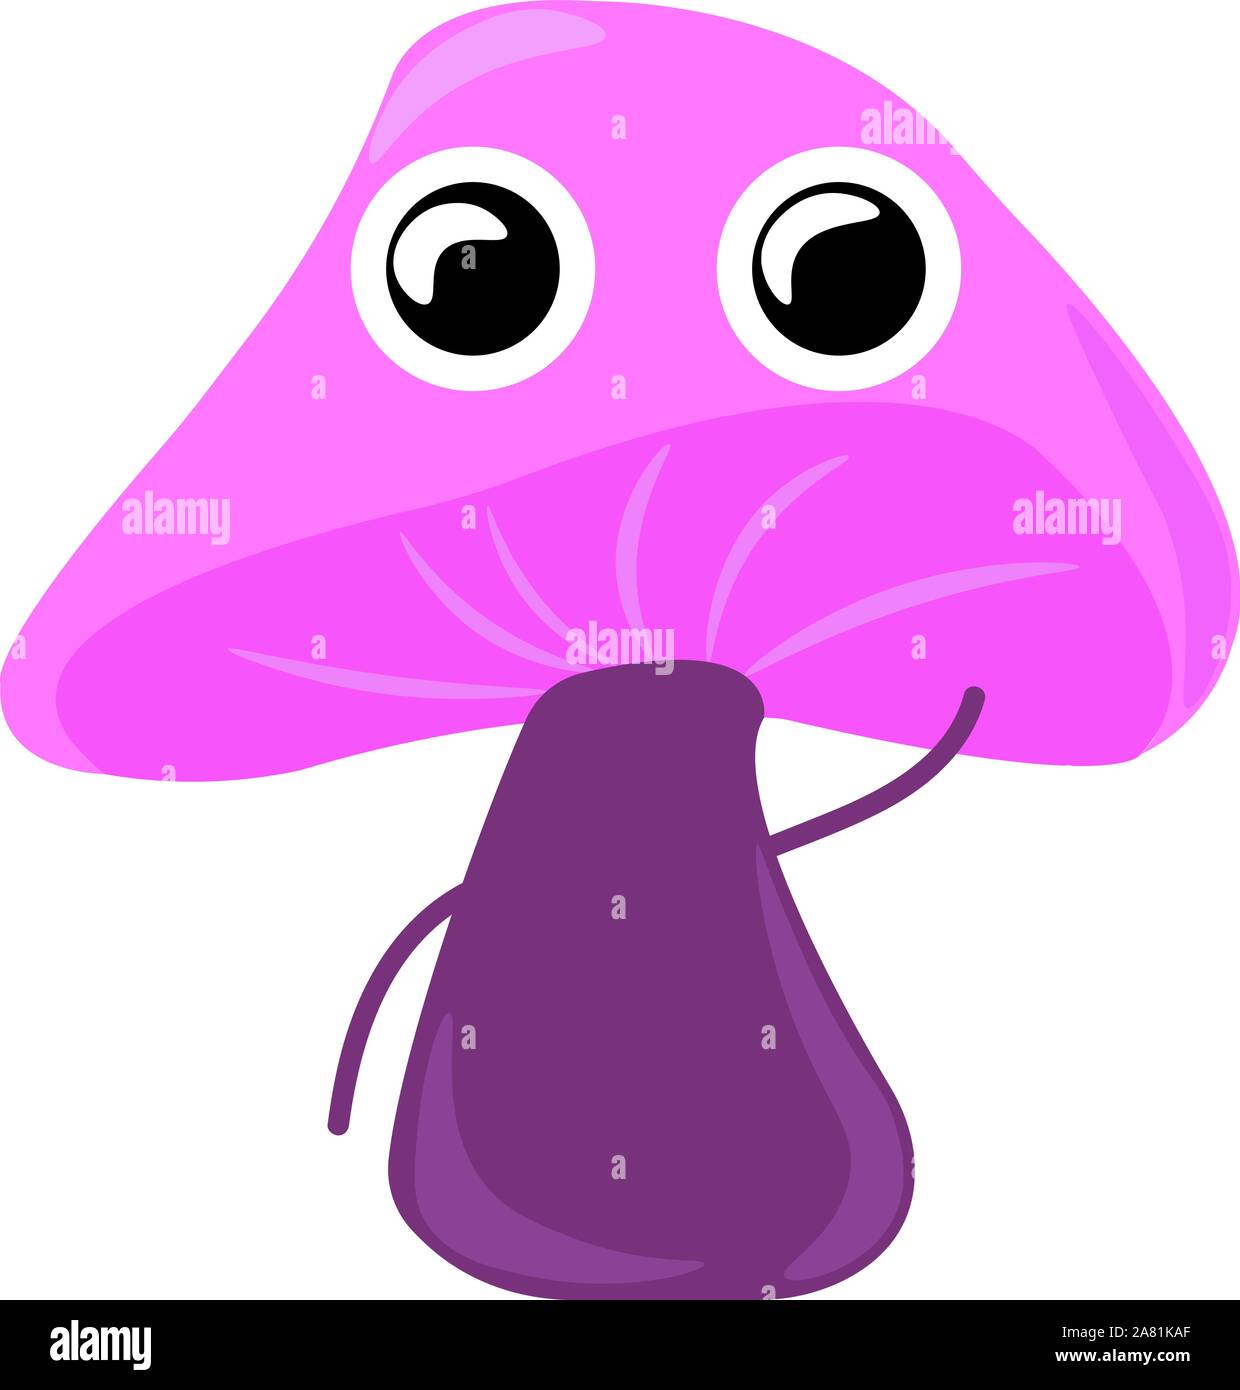 Cute pink mushroom, illustration, vector on white background. Stock Vector